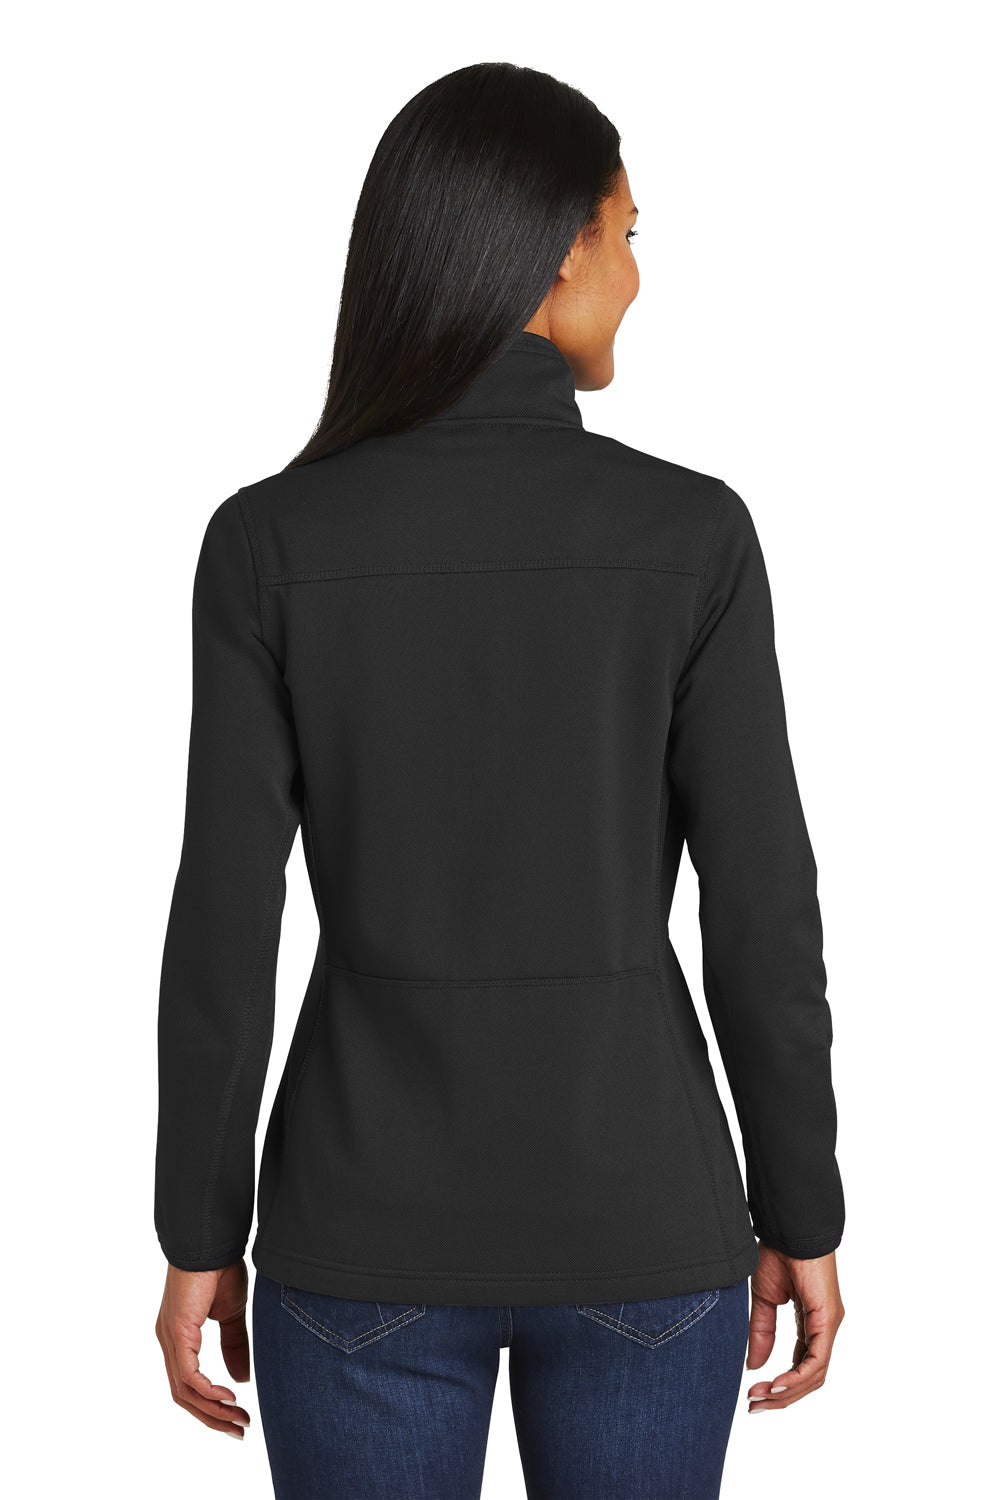 Port Authority L222 Womens Full Zip Fleece Jacket Black Back